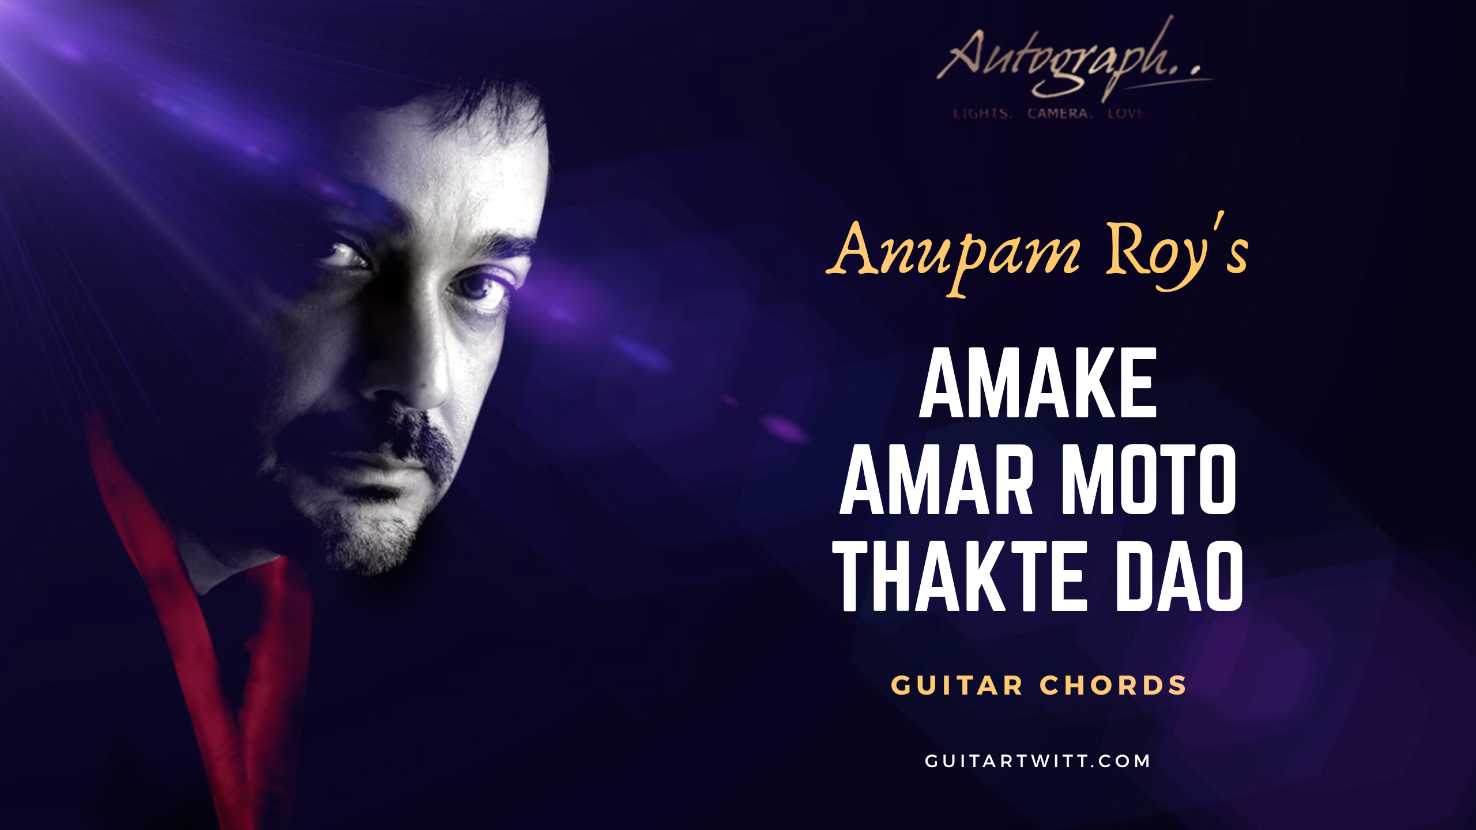 Amake Amar Moto Thakte Dao Guitar Chords